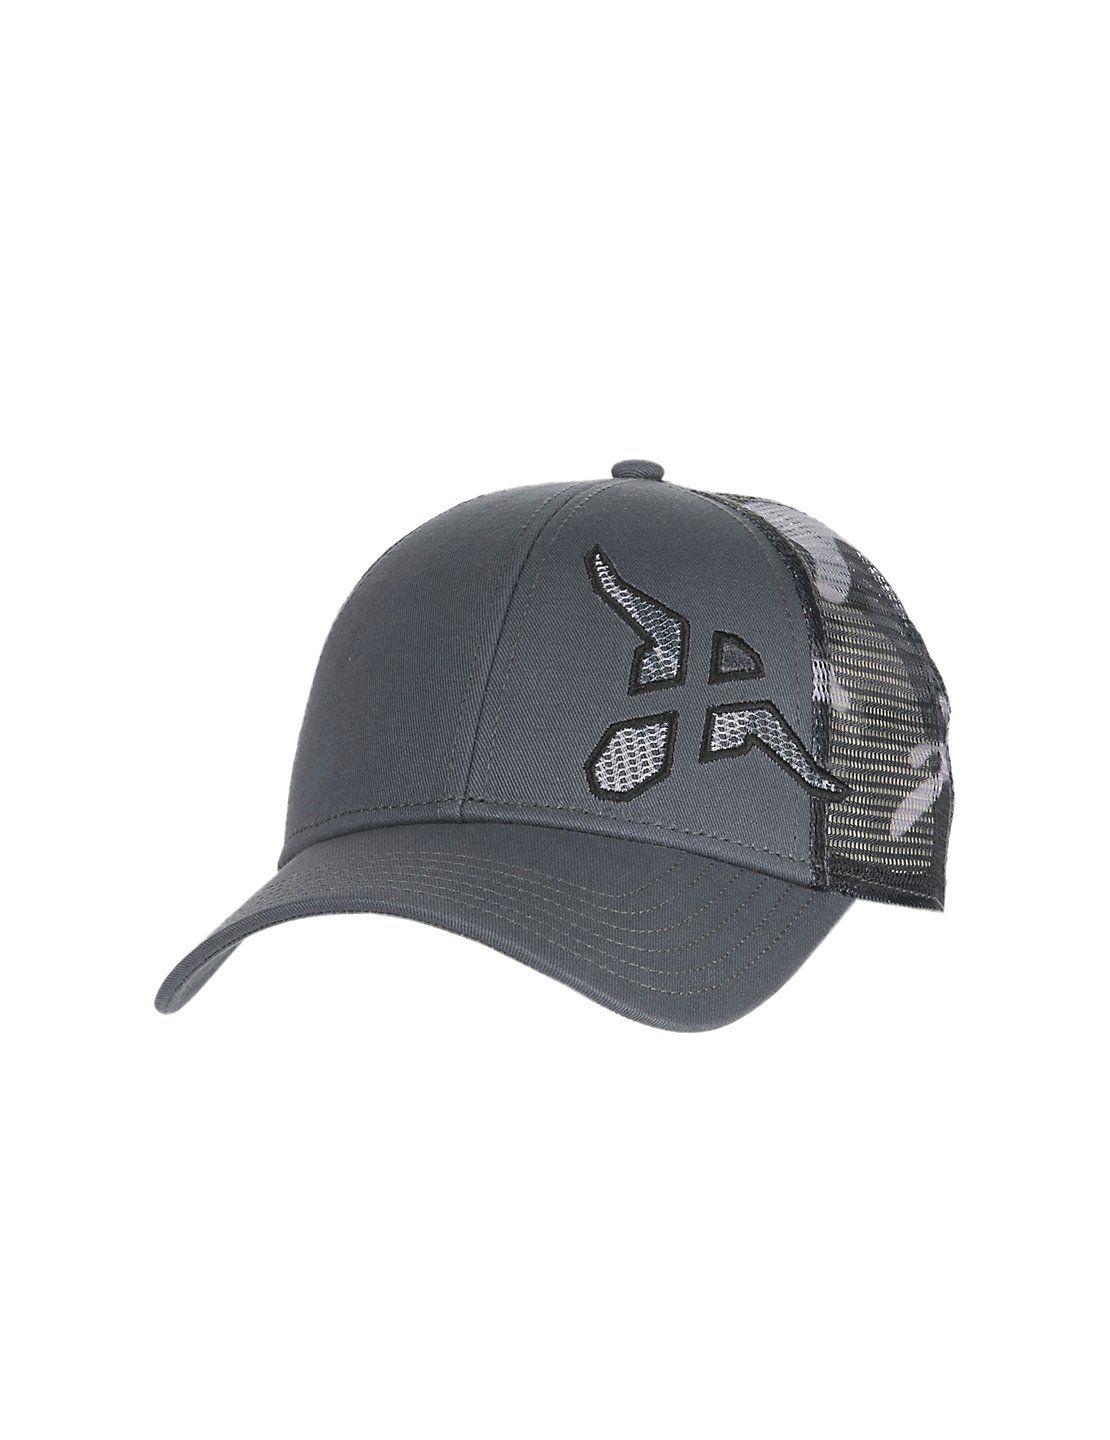 Grey and Green Ball Logo - Wrangler 20X Blue and Green Bull Logo Snap Back Cap. Cowboy Hats